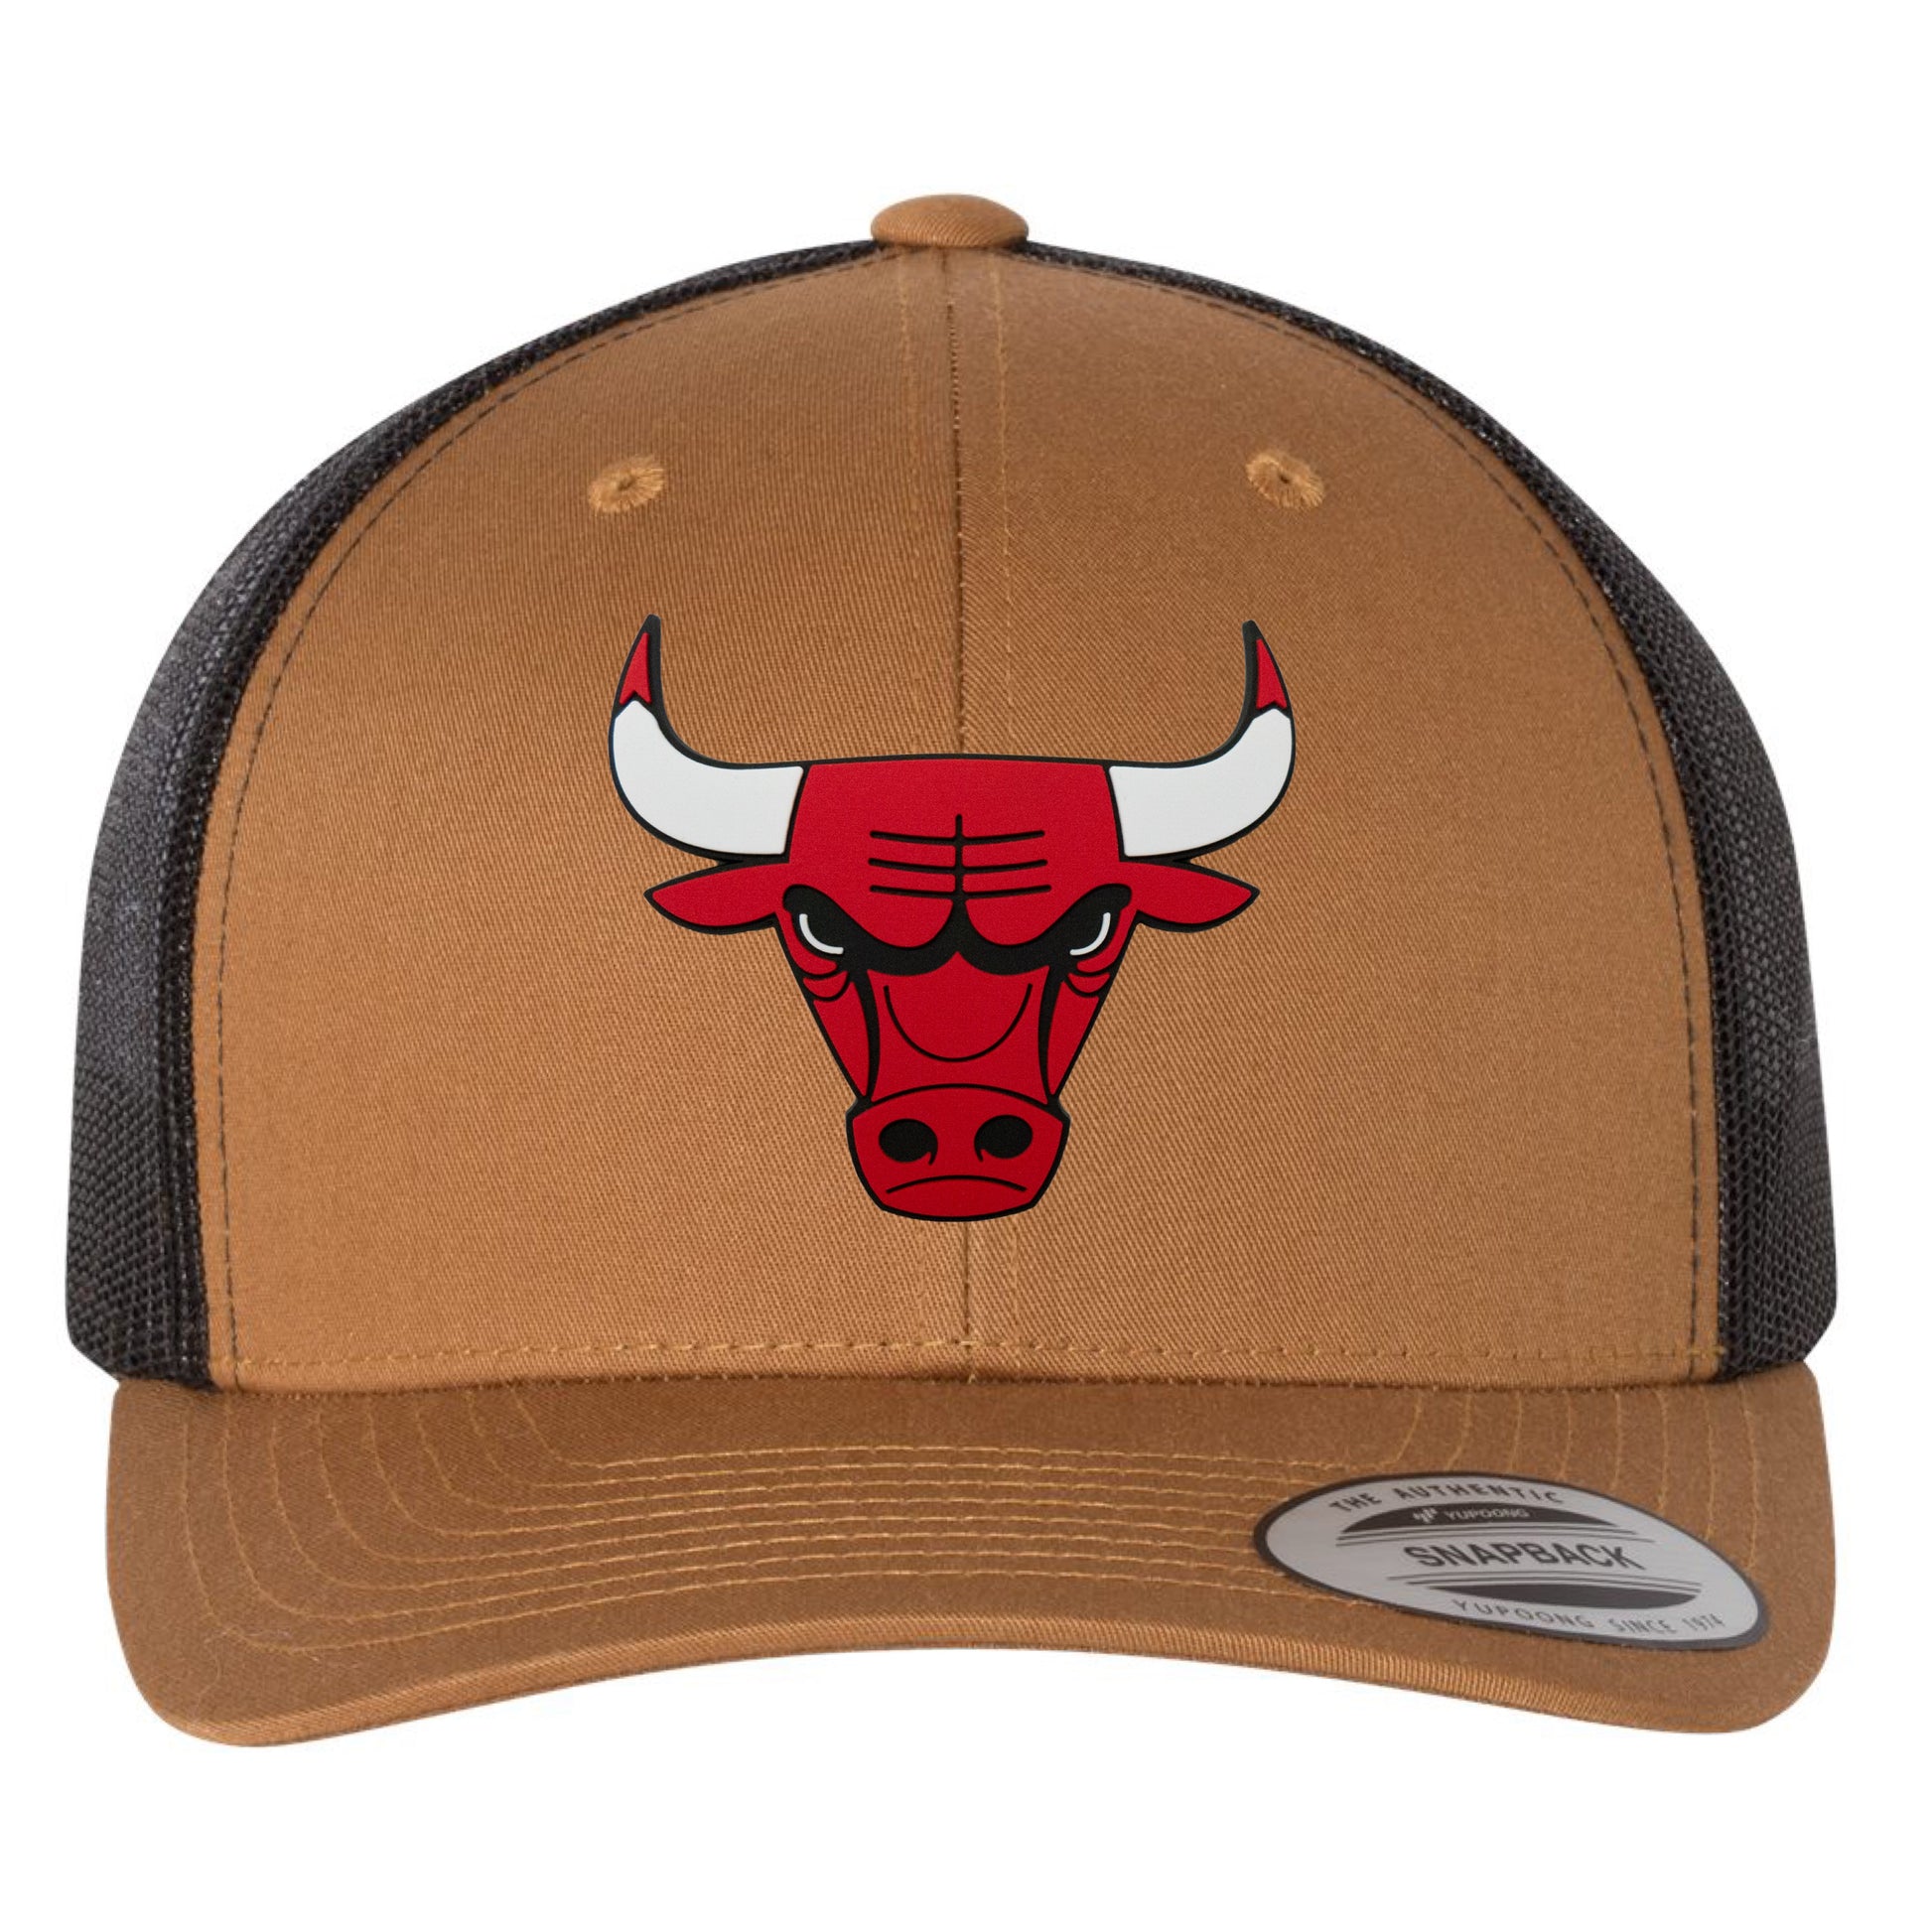 Where Da Bulls At? Orange SnapBack Hat.